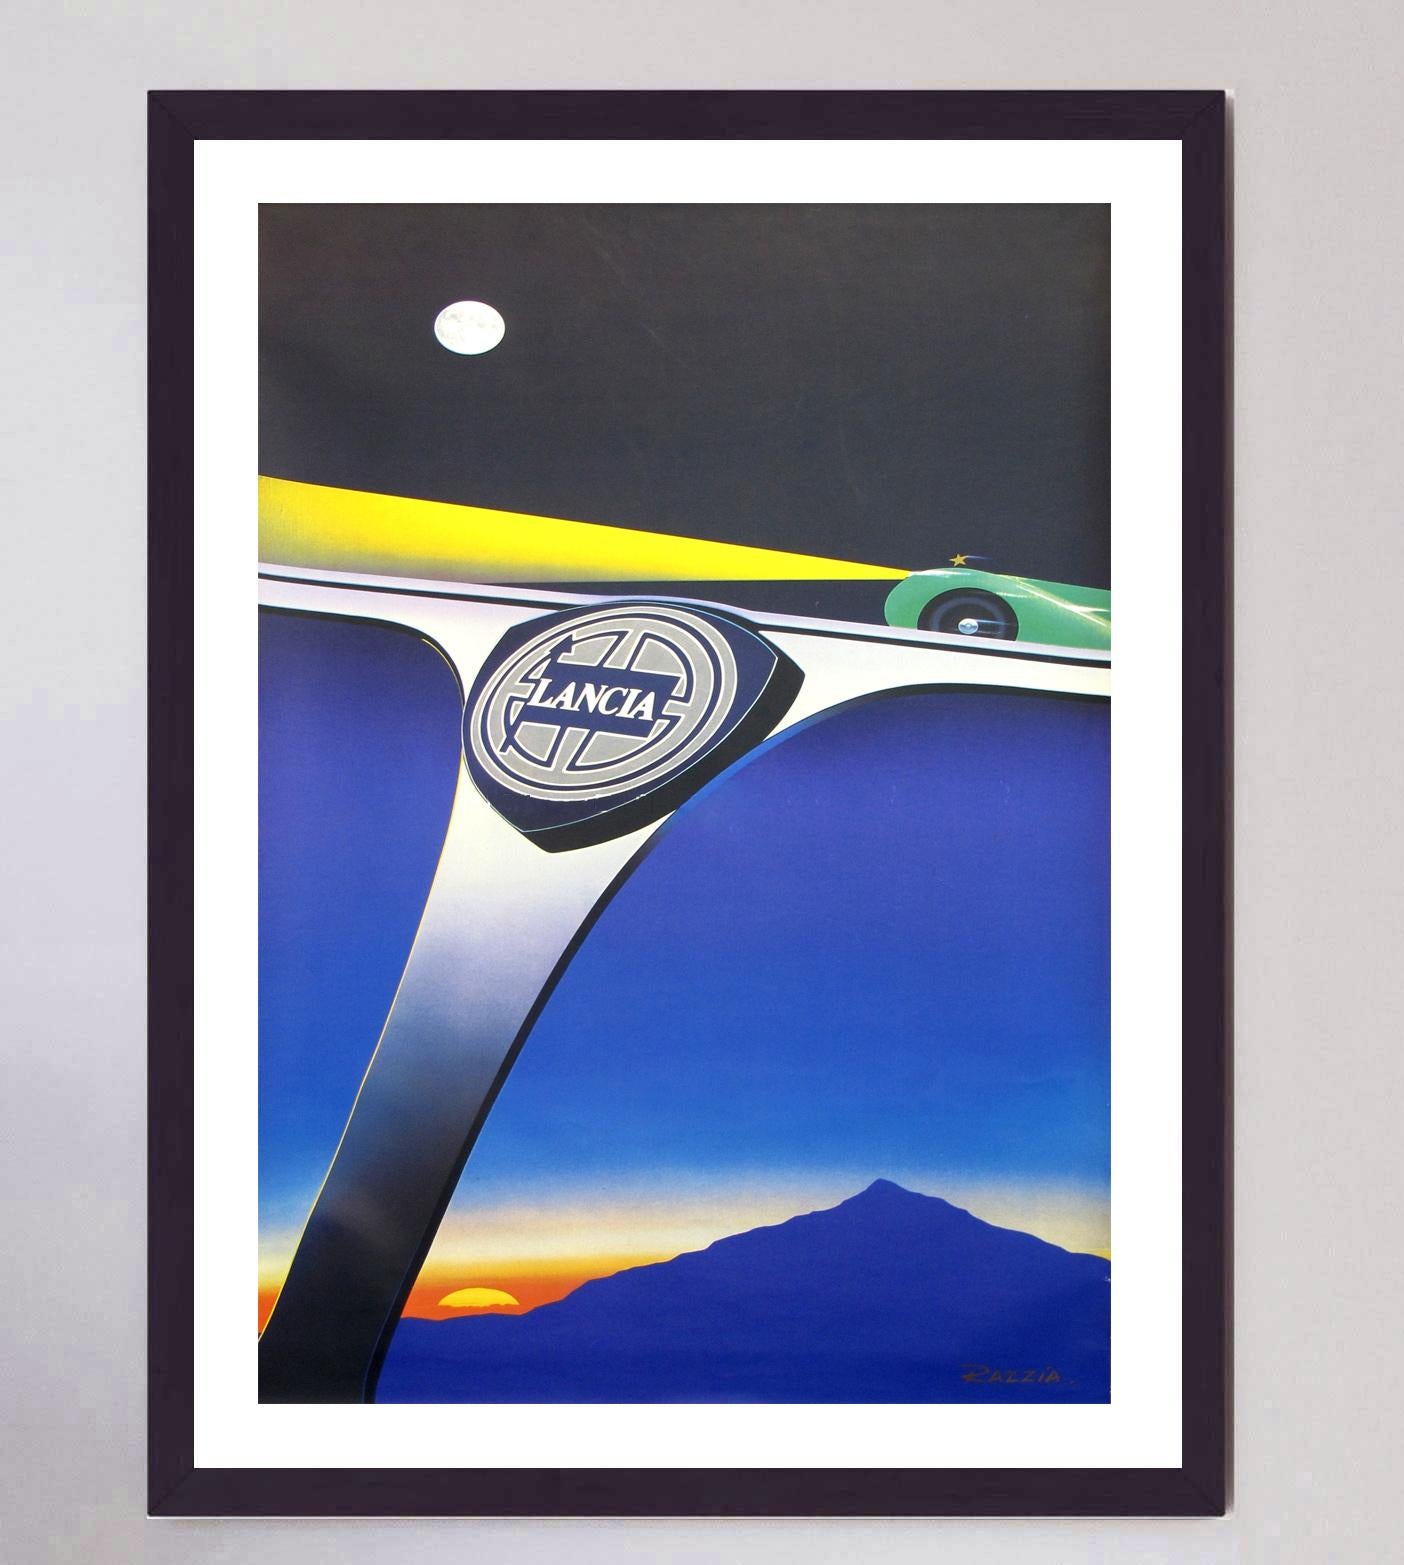 1992 Lancia - Razzia Original Vintage Poster In Good Condition For Sale In Winchester, GB